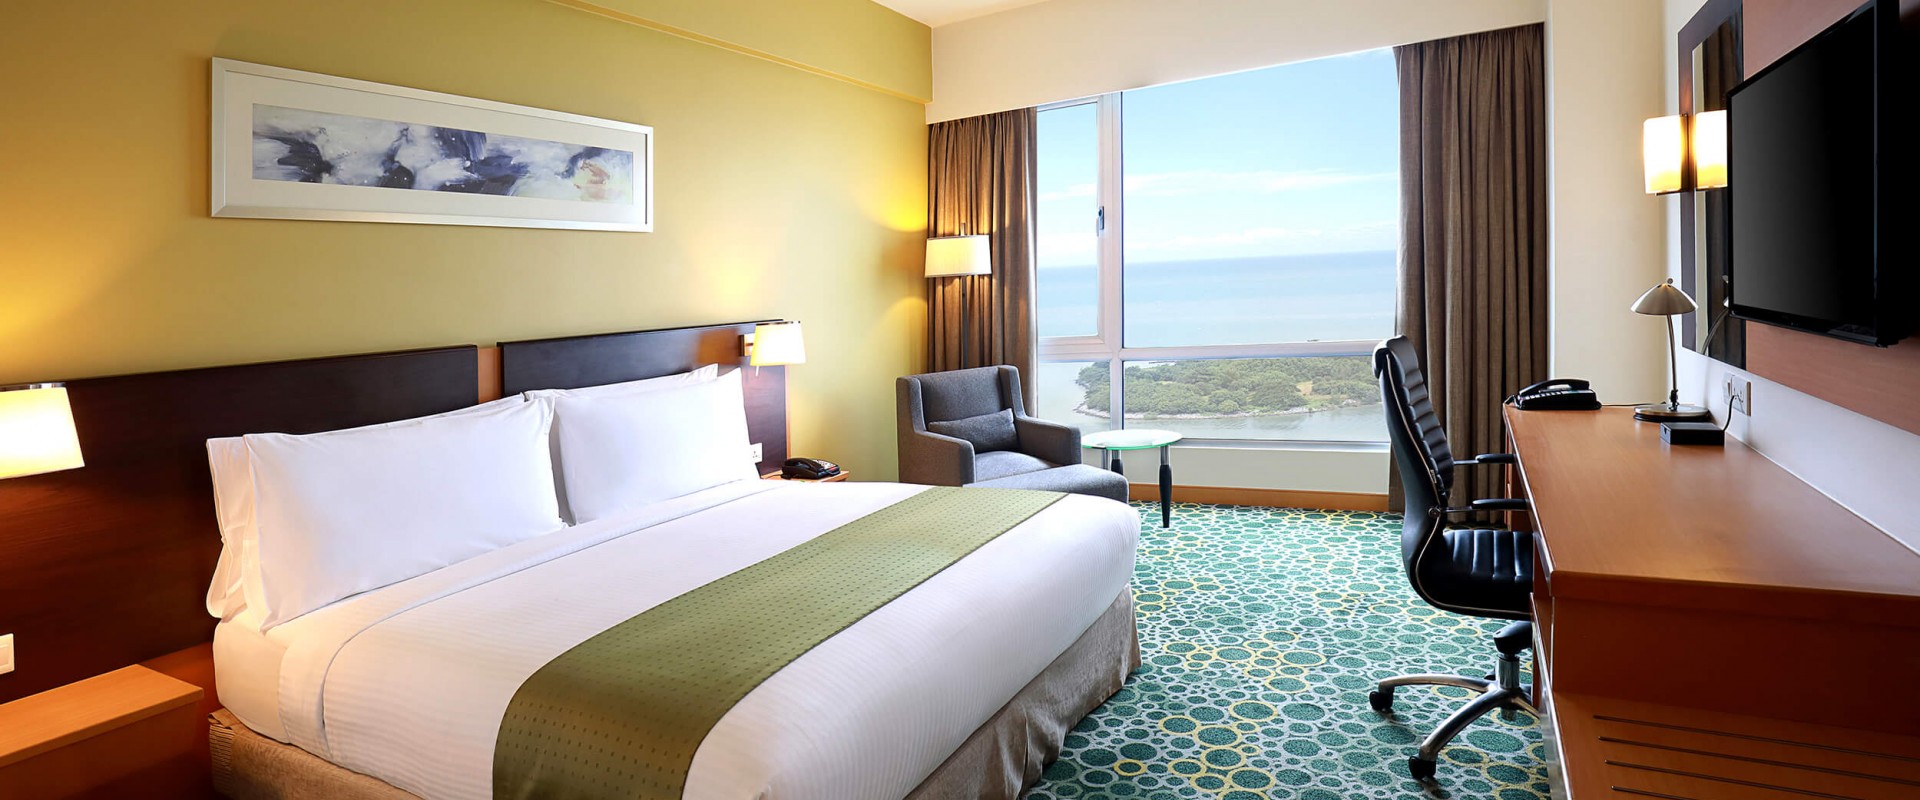 2 Bedroom Executive Suite Holiday Inn | Bedroom Suites